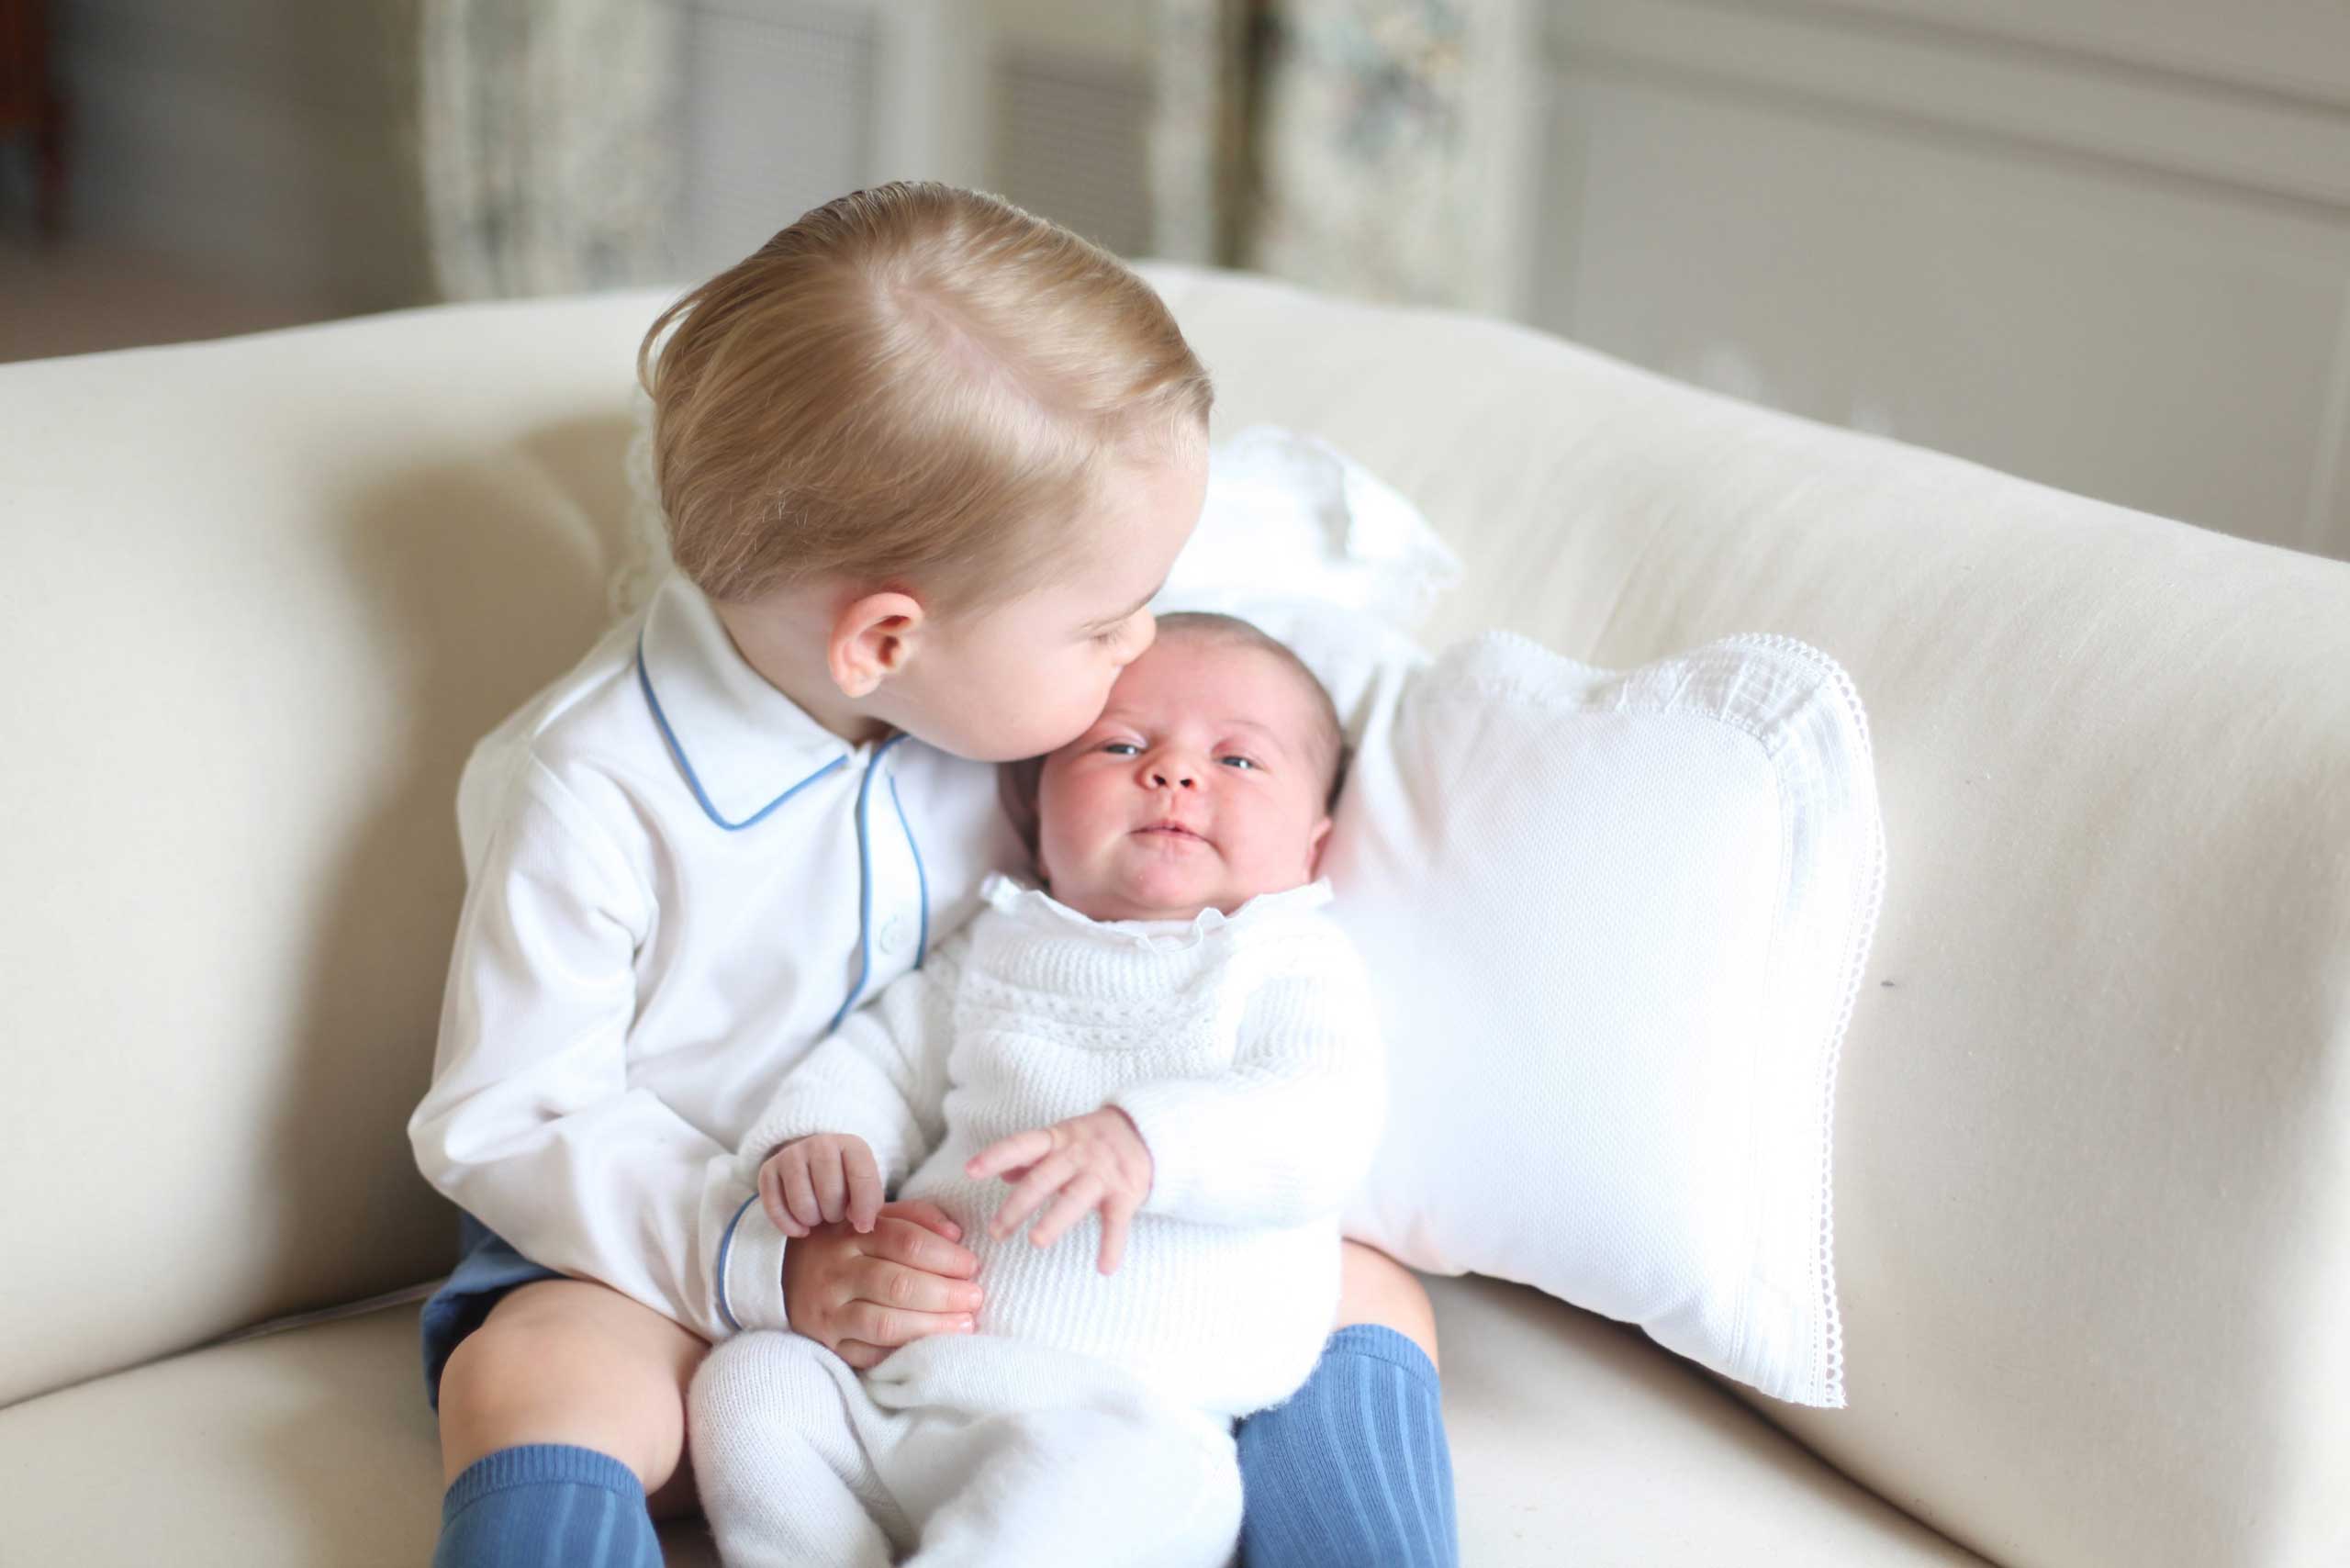 Prince George and his sister Princess Charlotte at Anmer Hall in Norfolk, Britain, mid-May 2015.